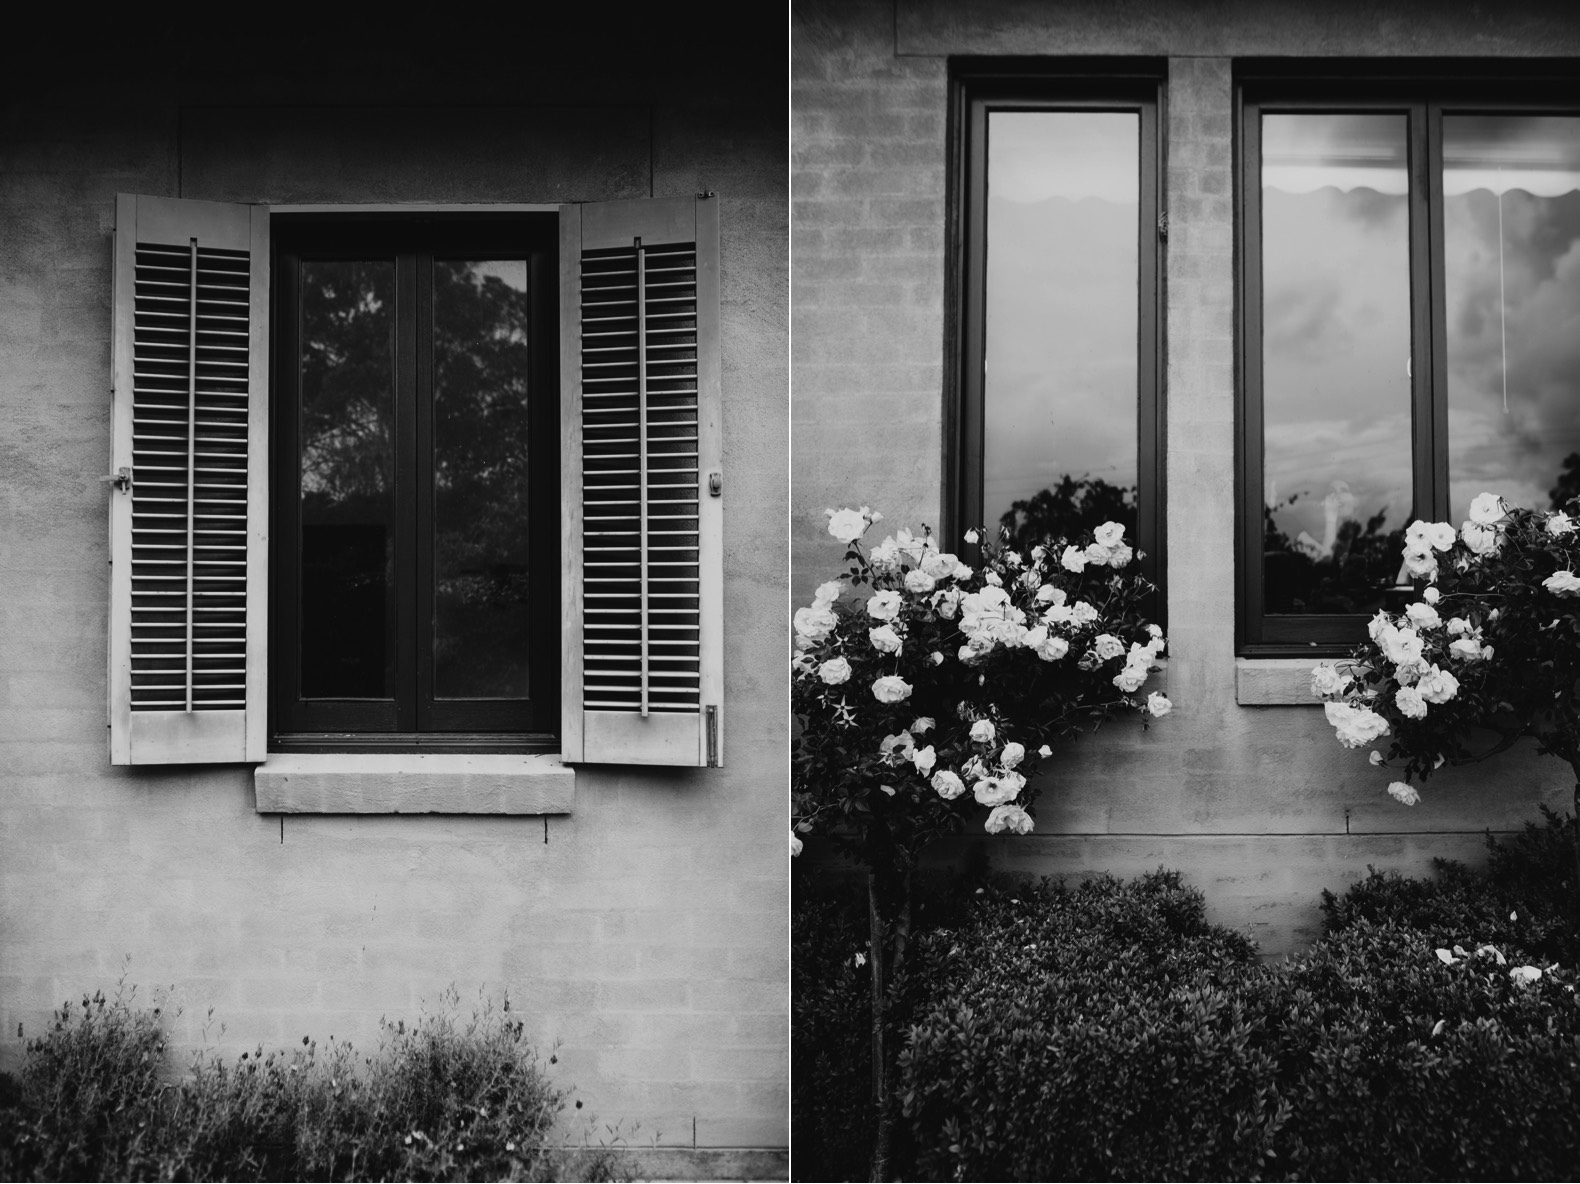 thornbury lodge stanthorpe windows and roses in the rain